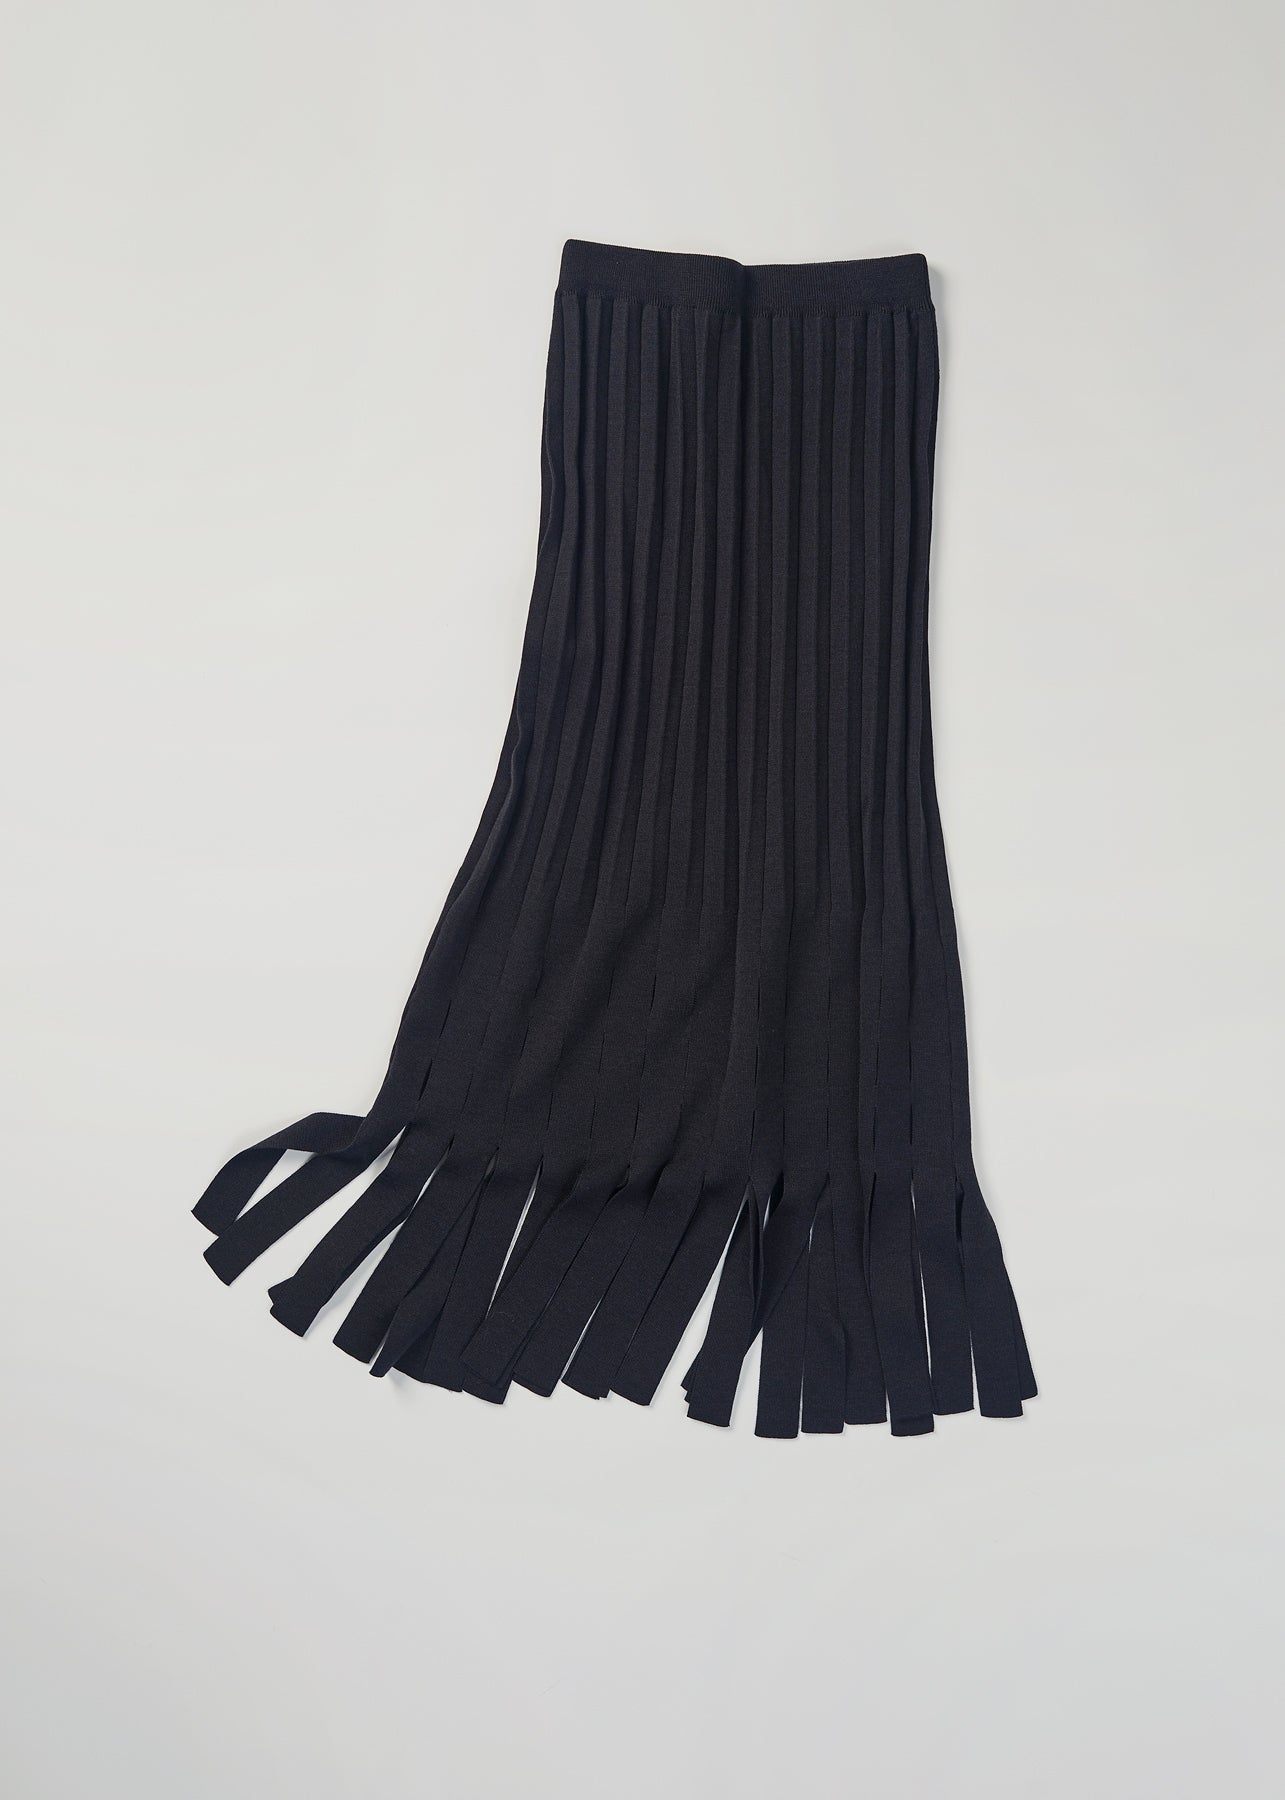 AERON ARTIC Fringed skirt – graphite